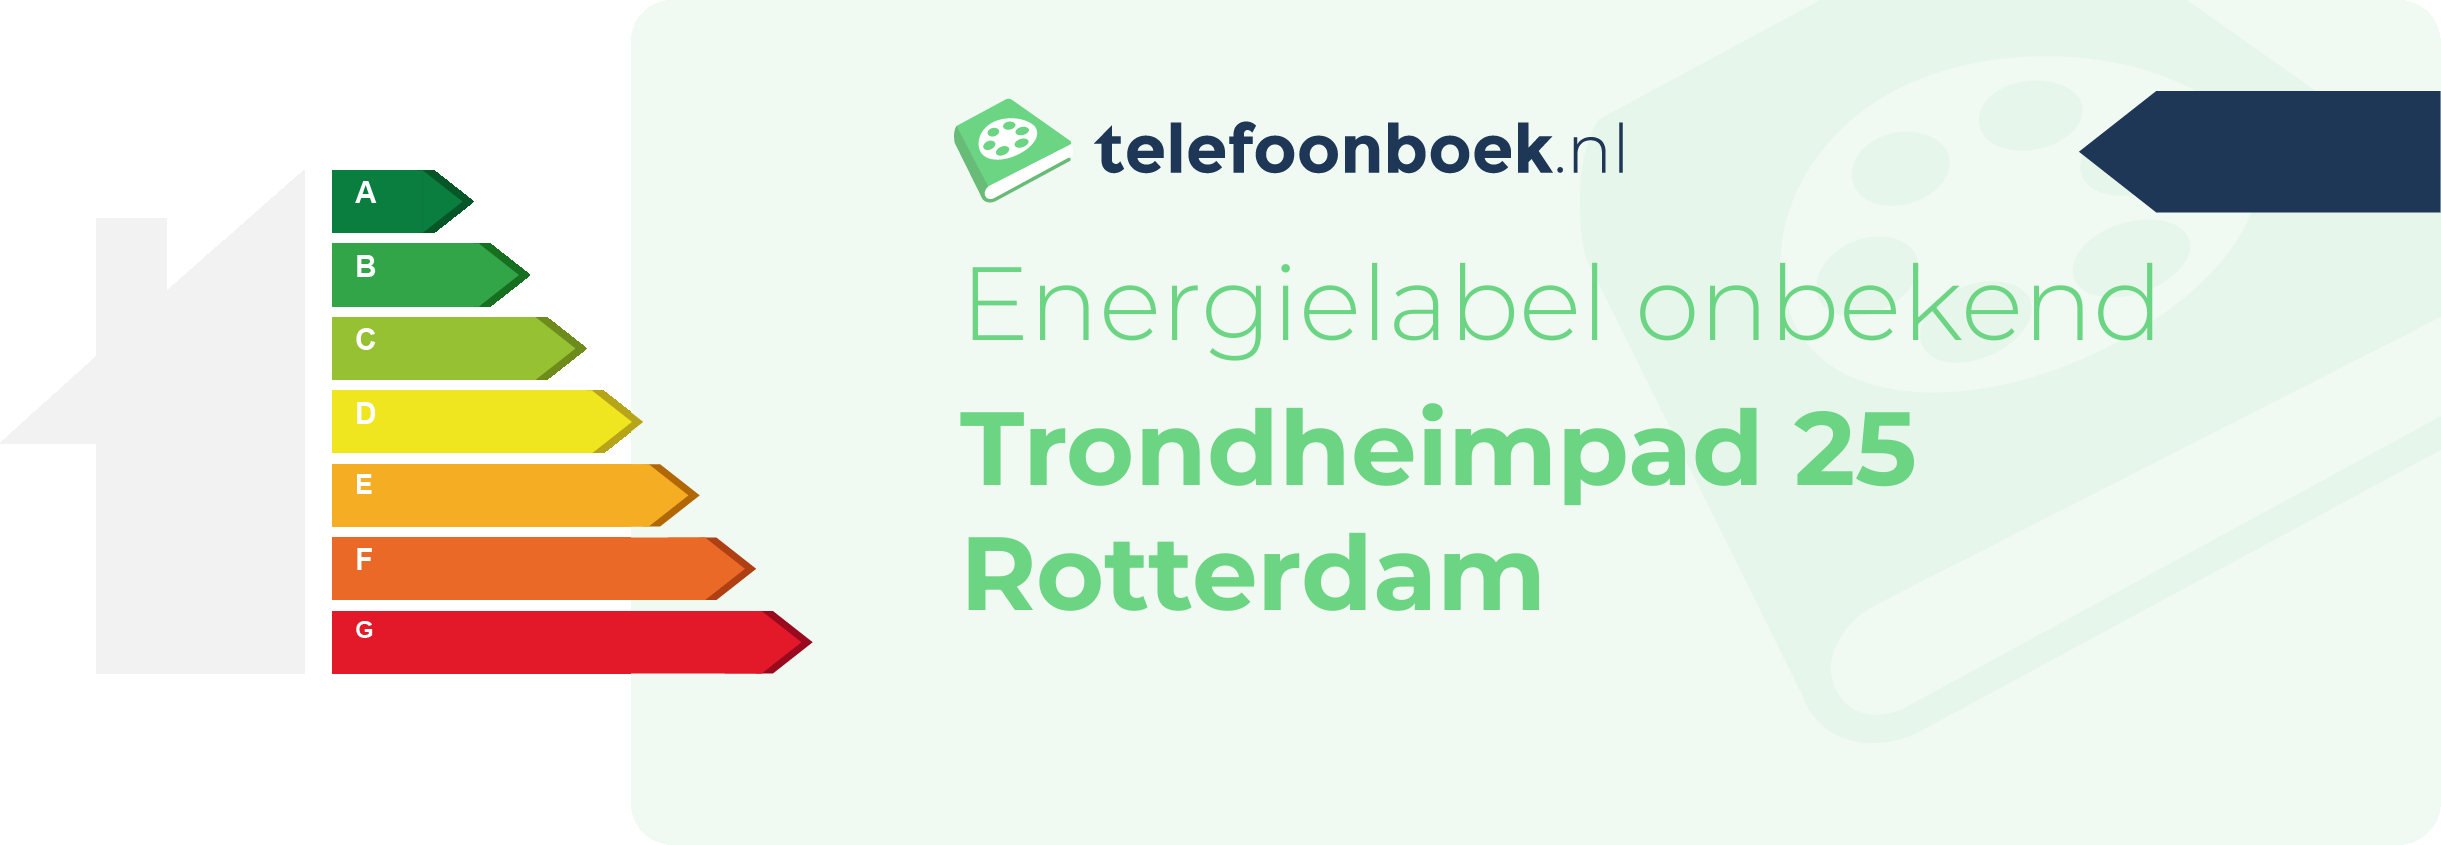 Energielabel Trondheimpad 25 Rotterdam